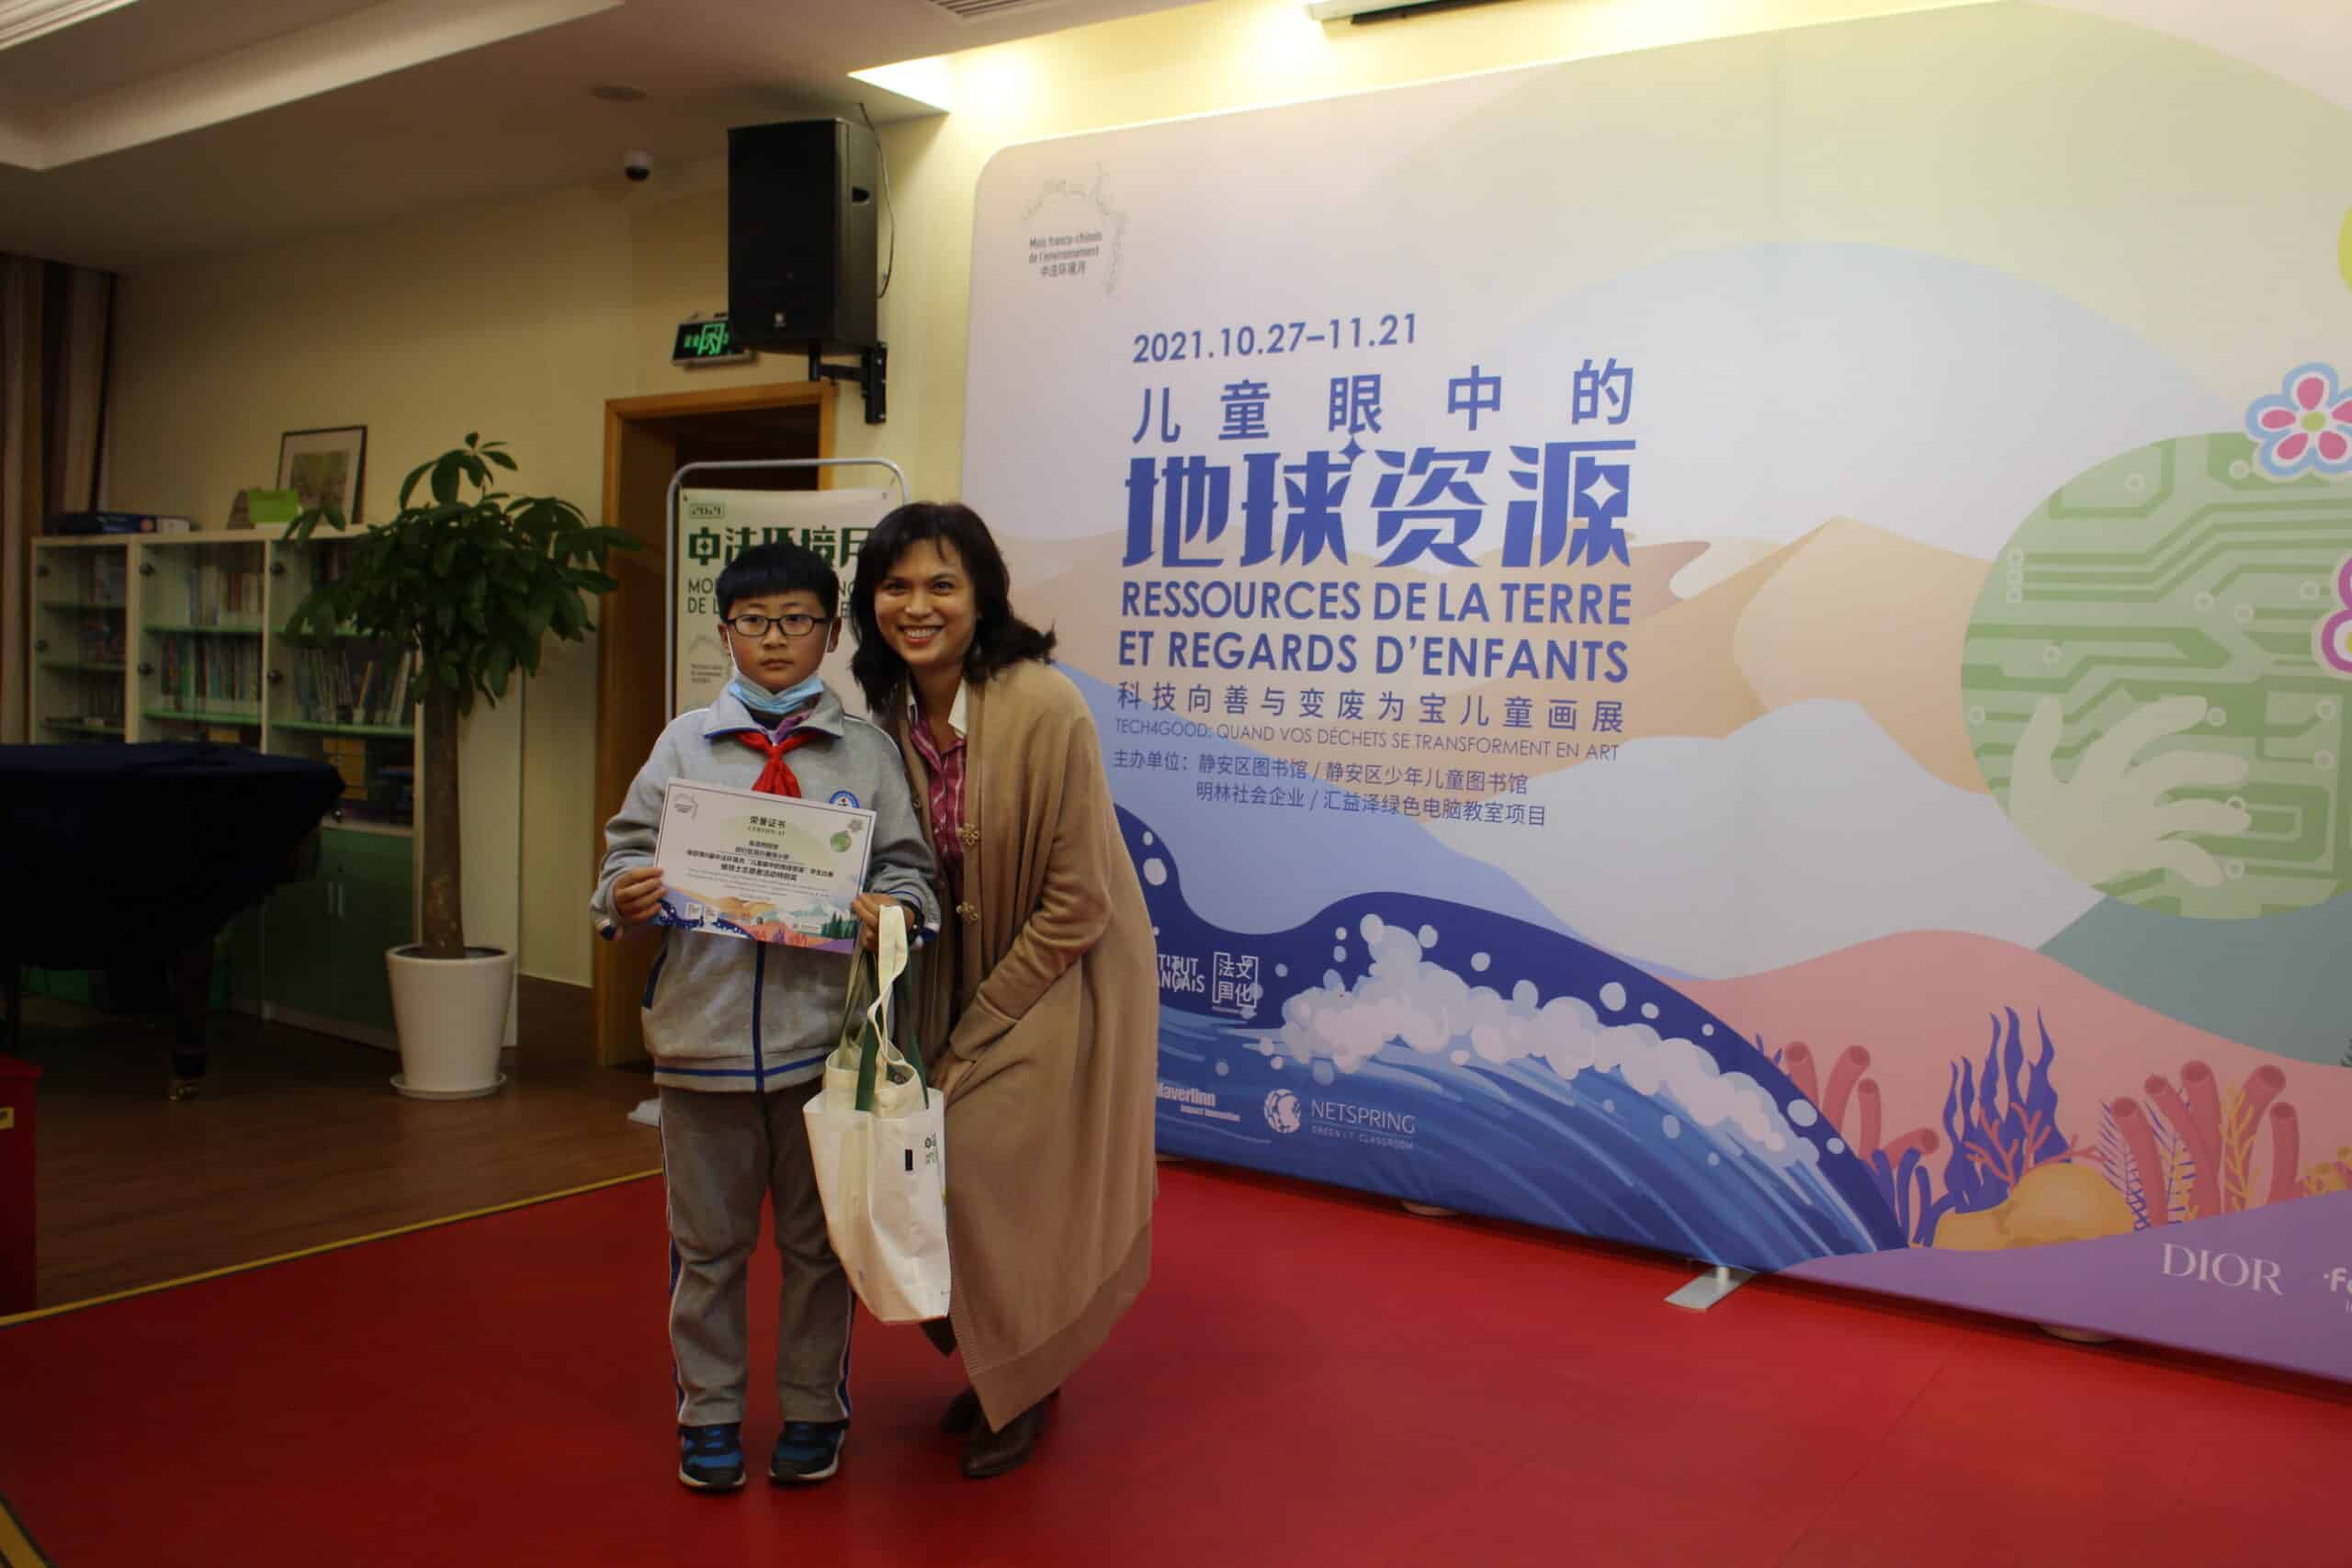 Minny presents the VTS Volunteering Special Award to Wu Haoran. Photo courtesy of Netspring